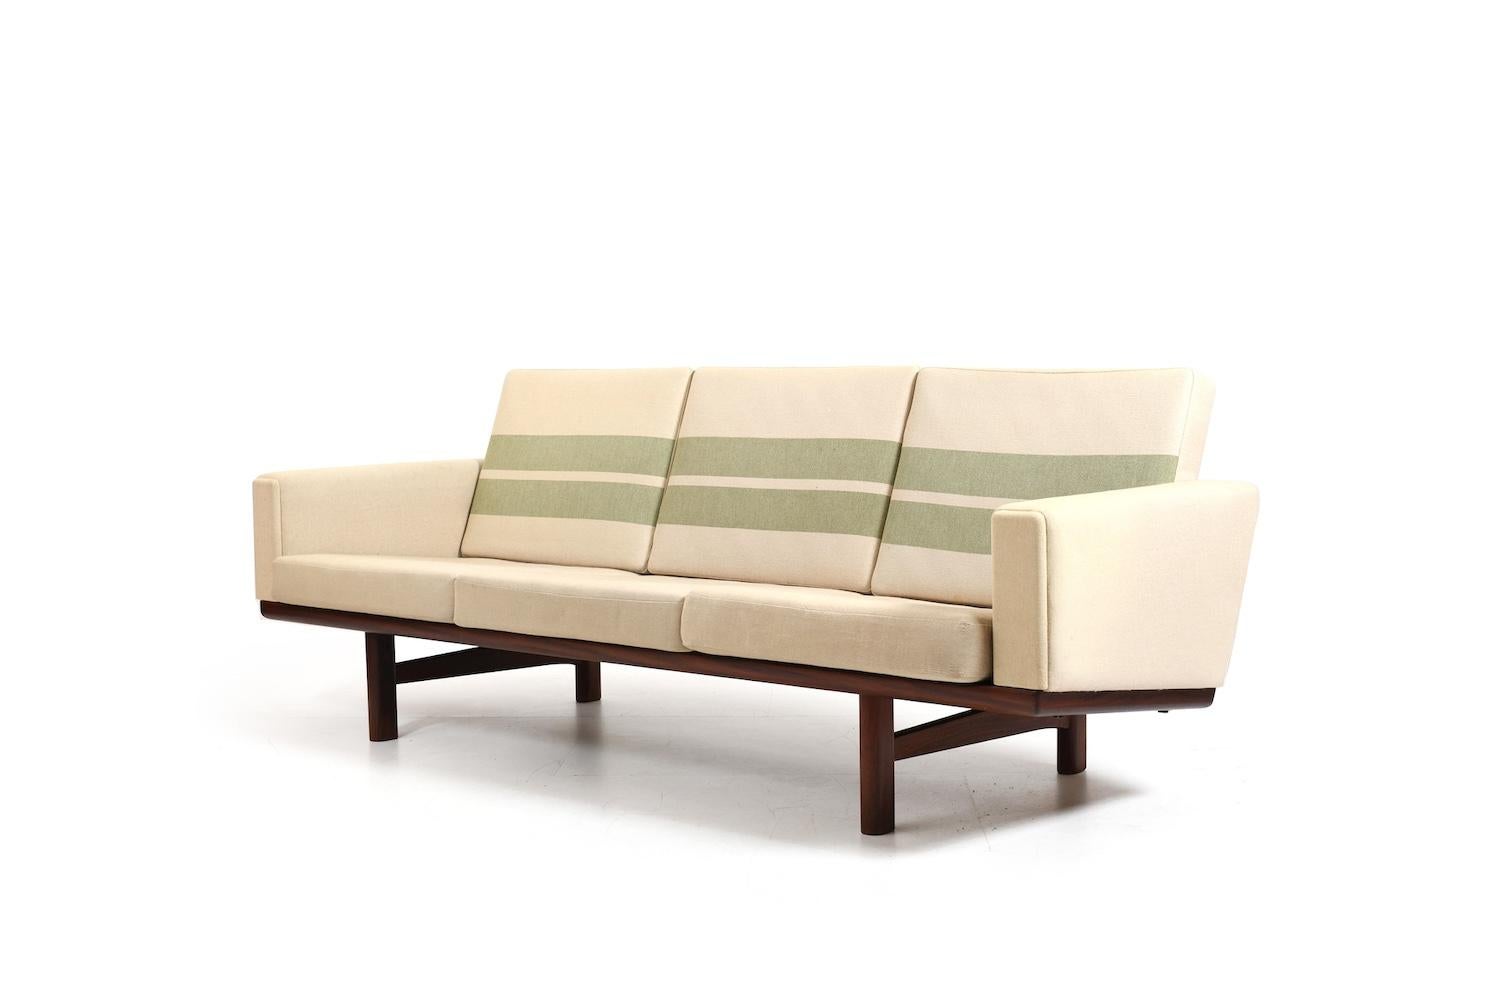 GE-236 / 3 sofa in solid teak, designed by Hans J. Wegner in 1955. Manufactured by Getama in 1960s. Original cushions in creme / green stripes wool fabric,